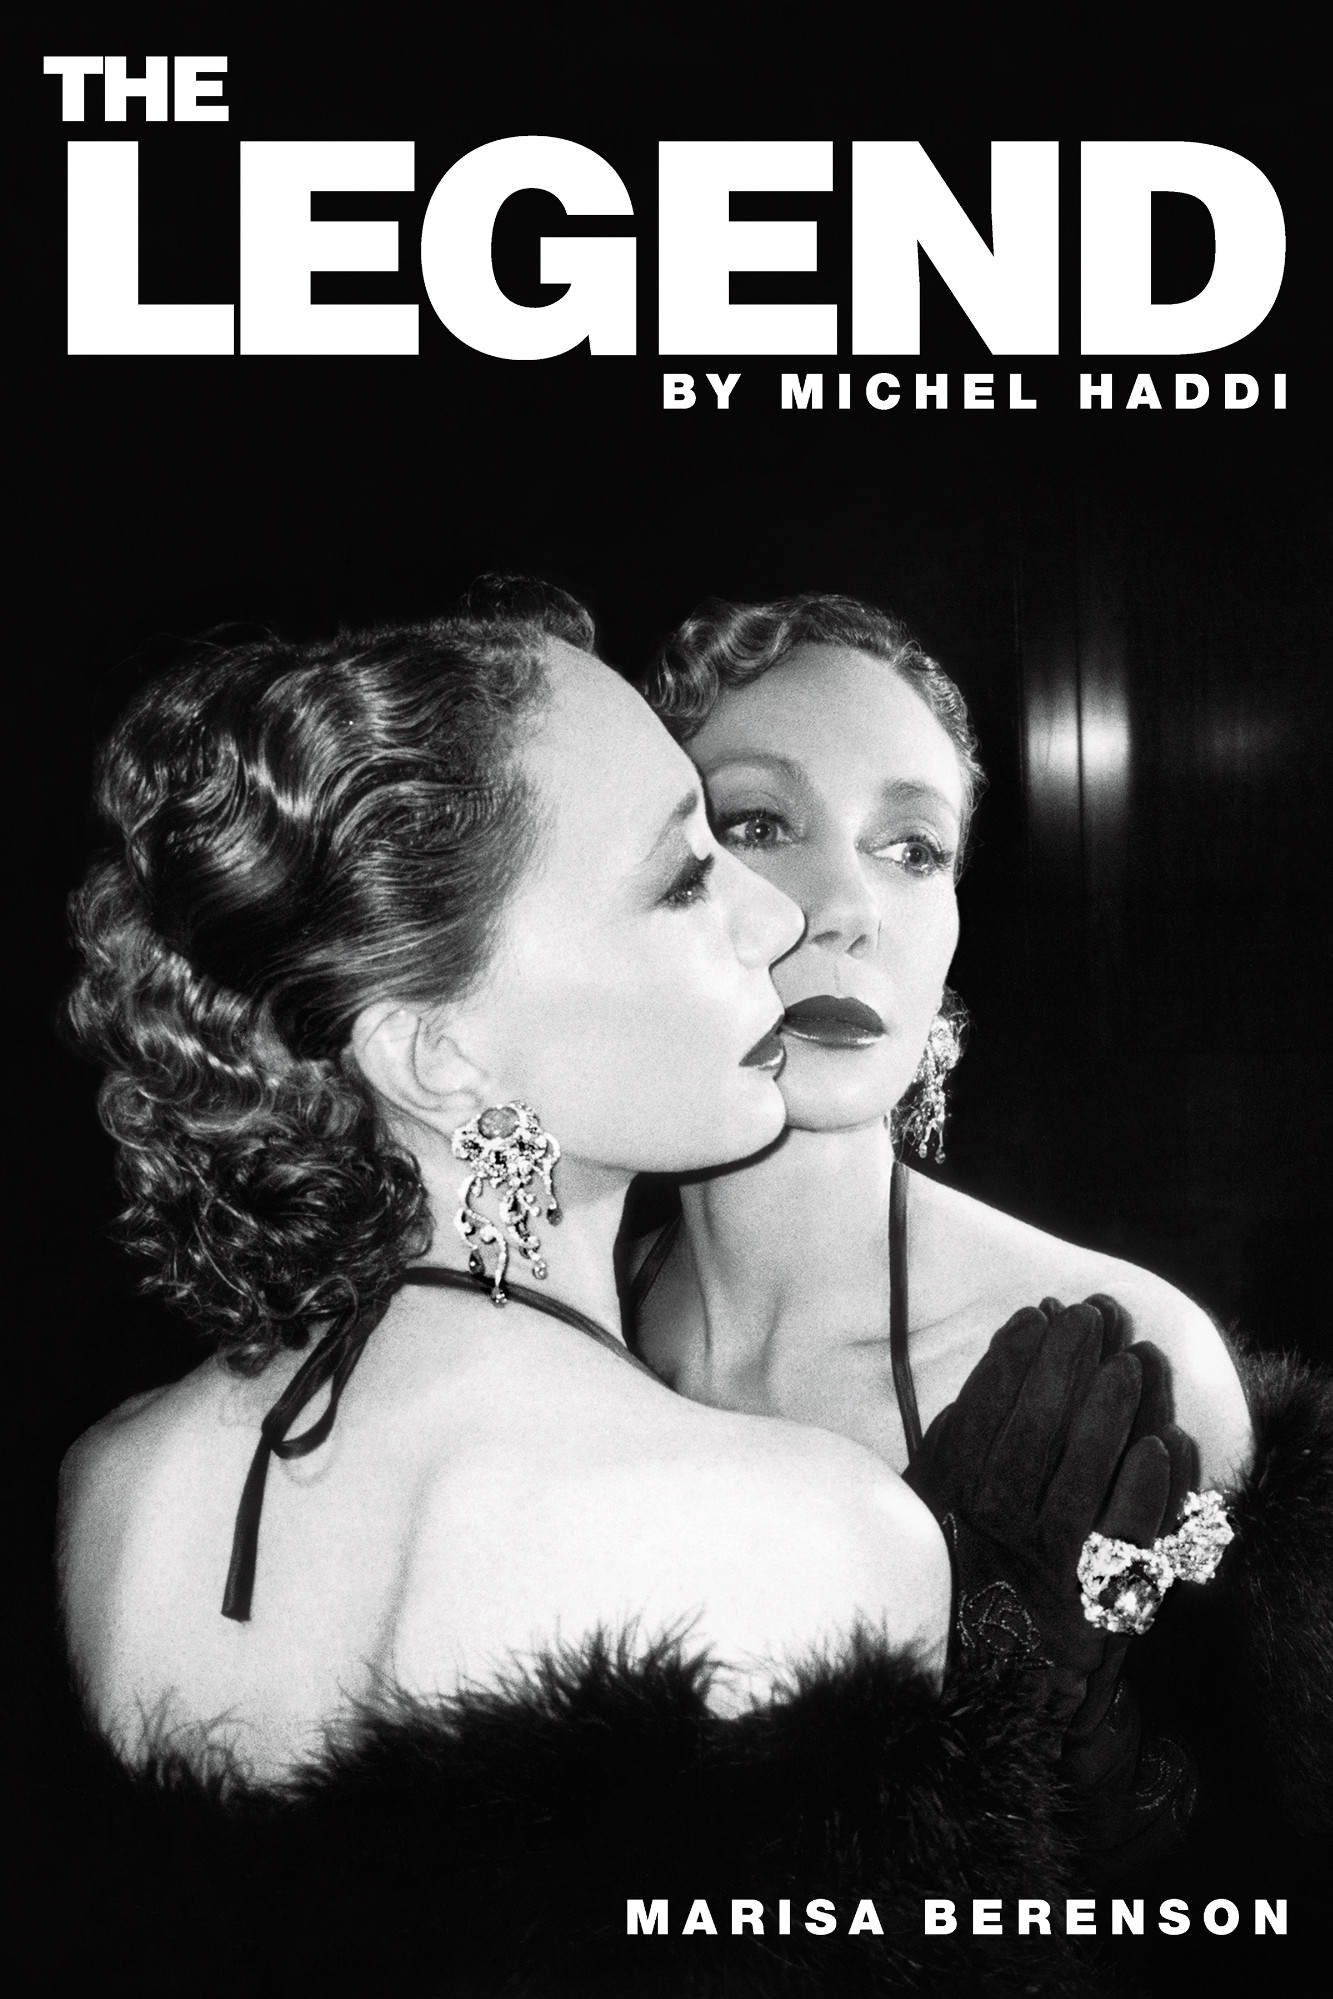 The Legend - Marisa Berenson by Michel Haddi